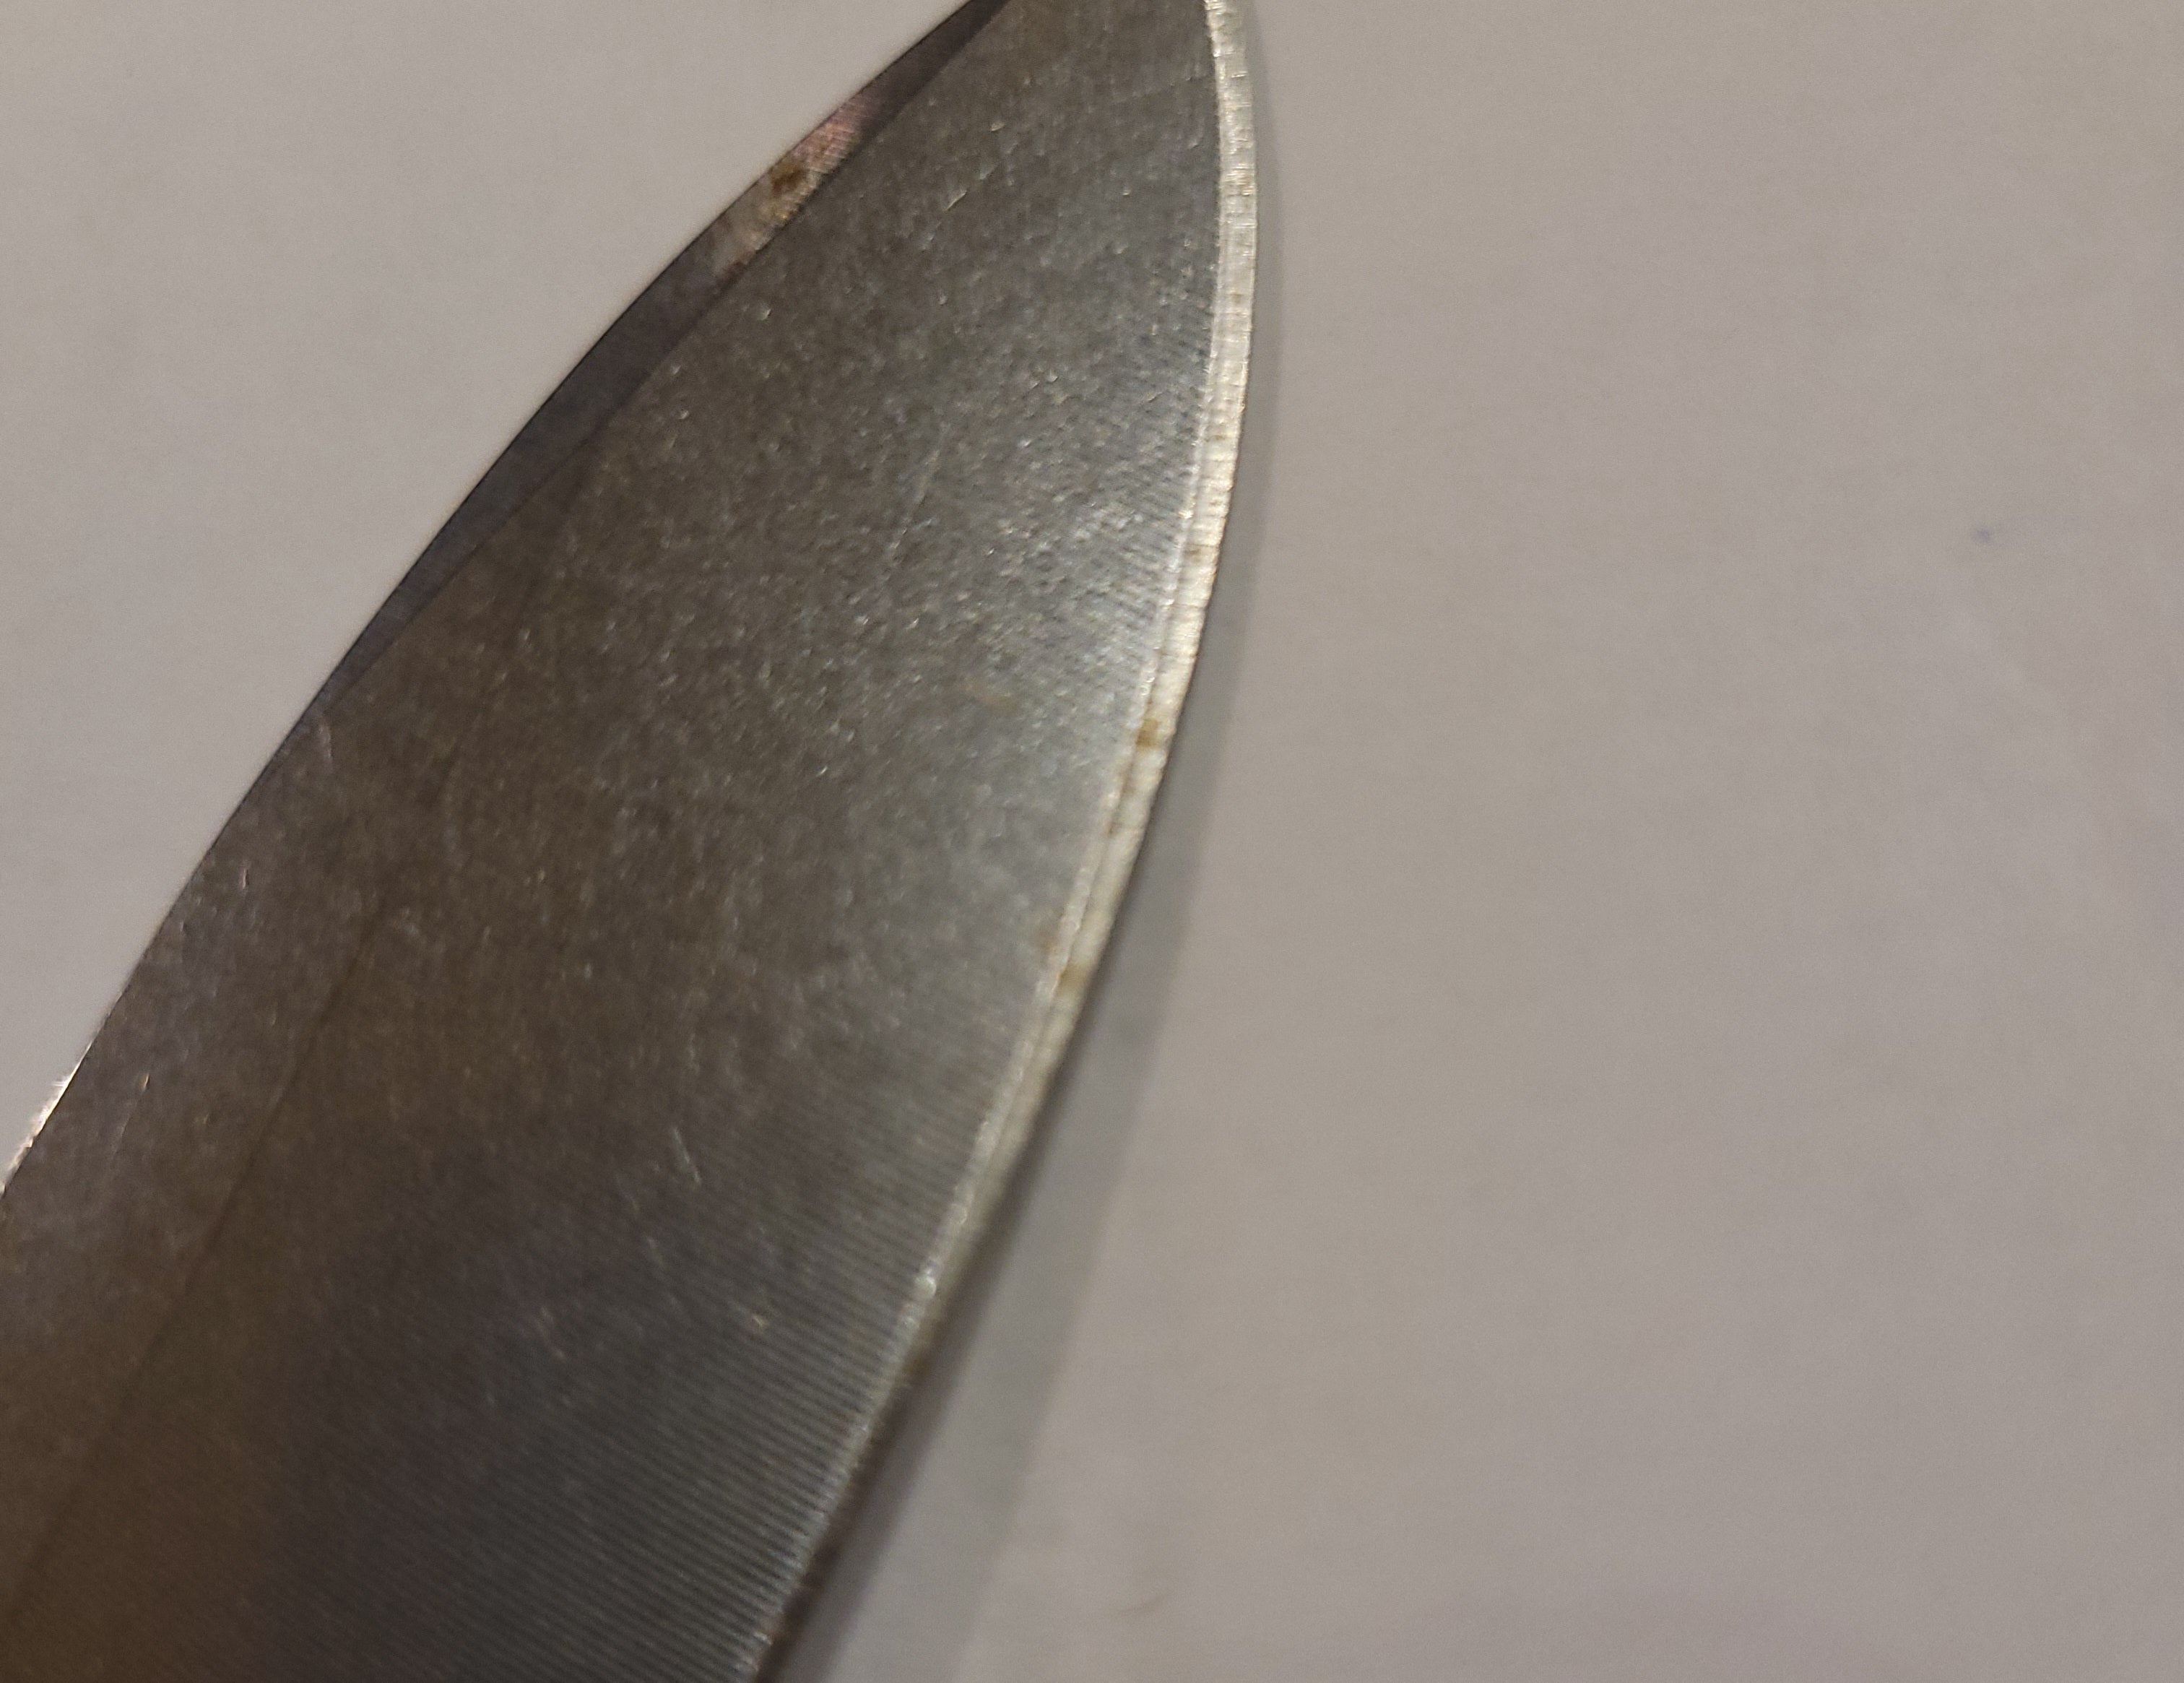 AllOutdoor Review: Benchmade Casbah AutoKnife